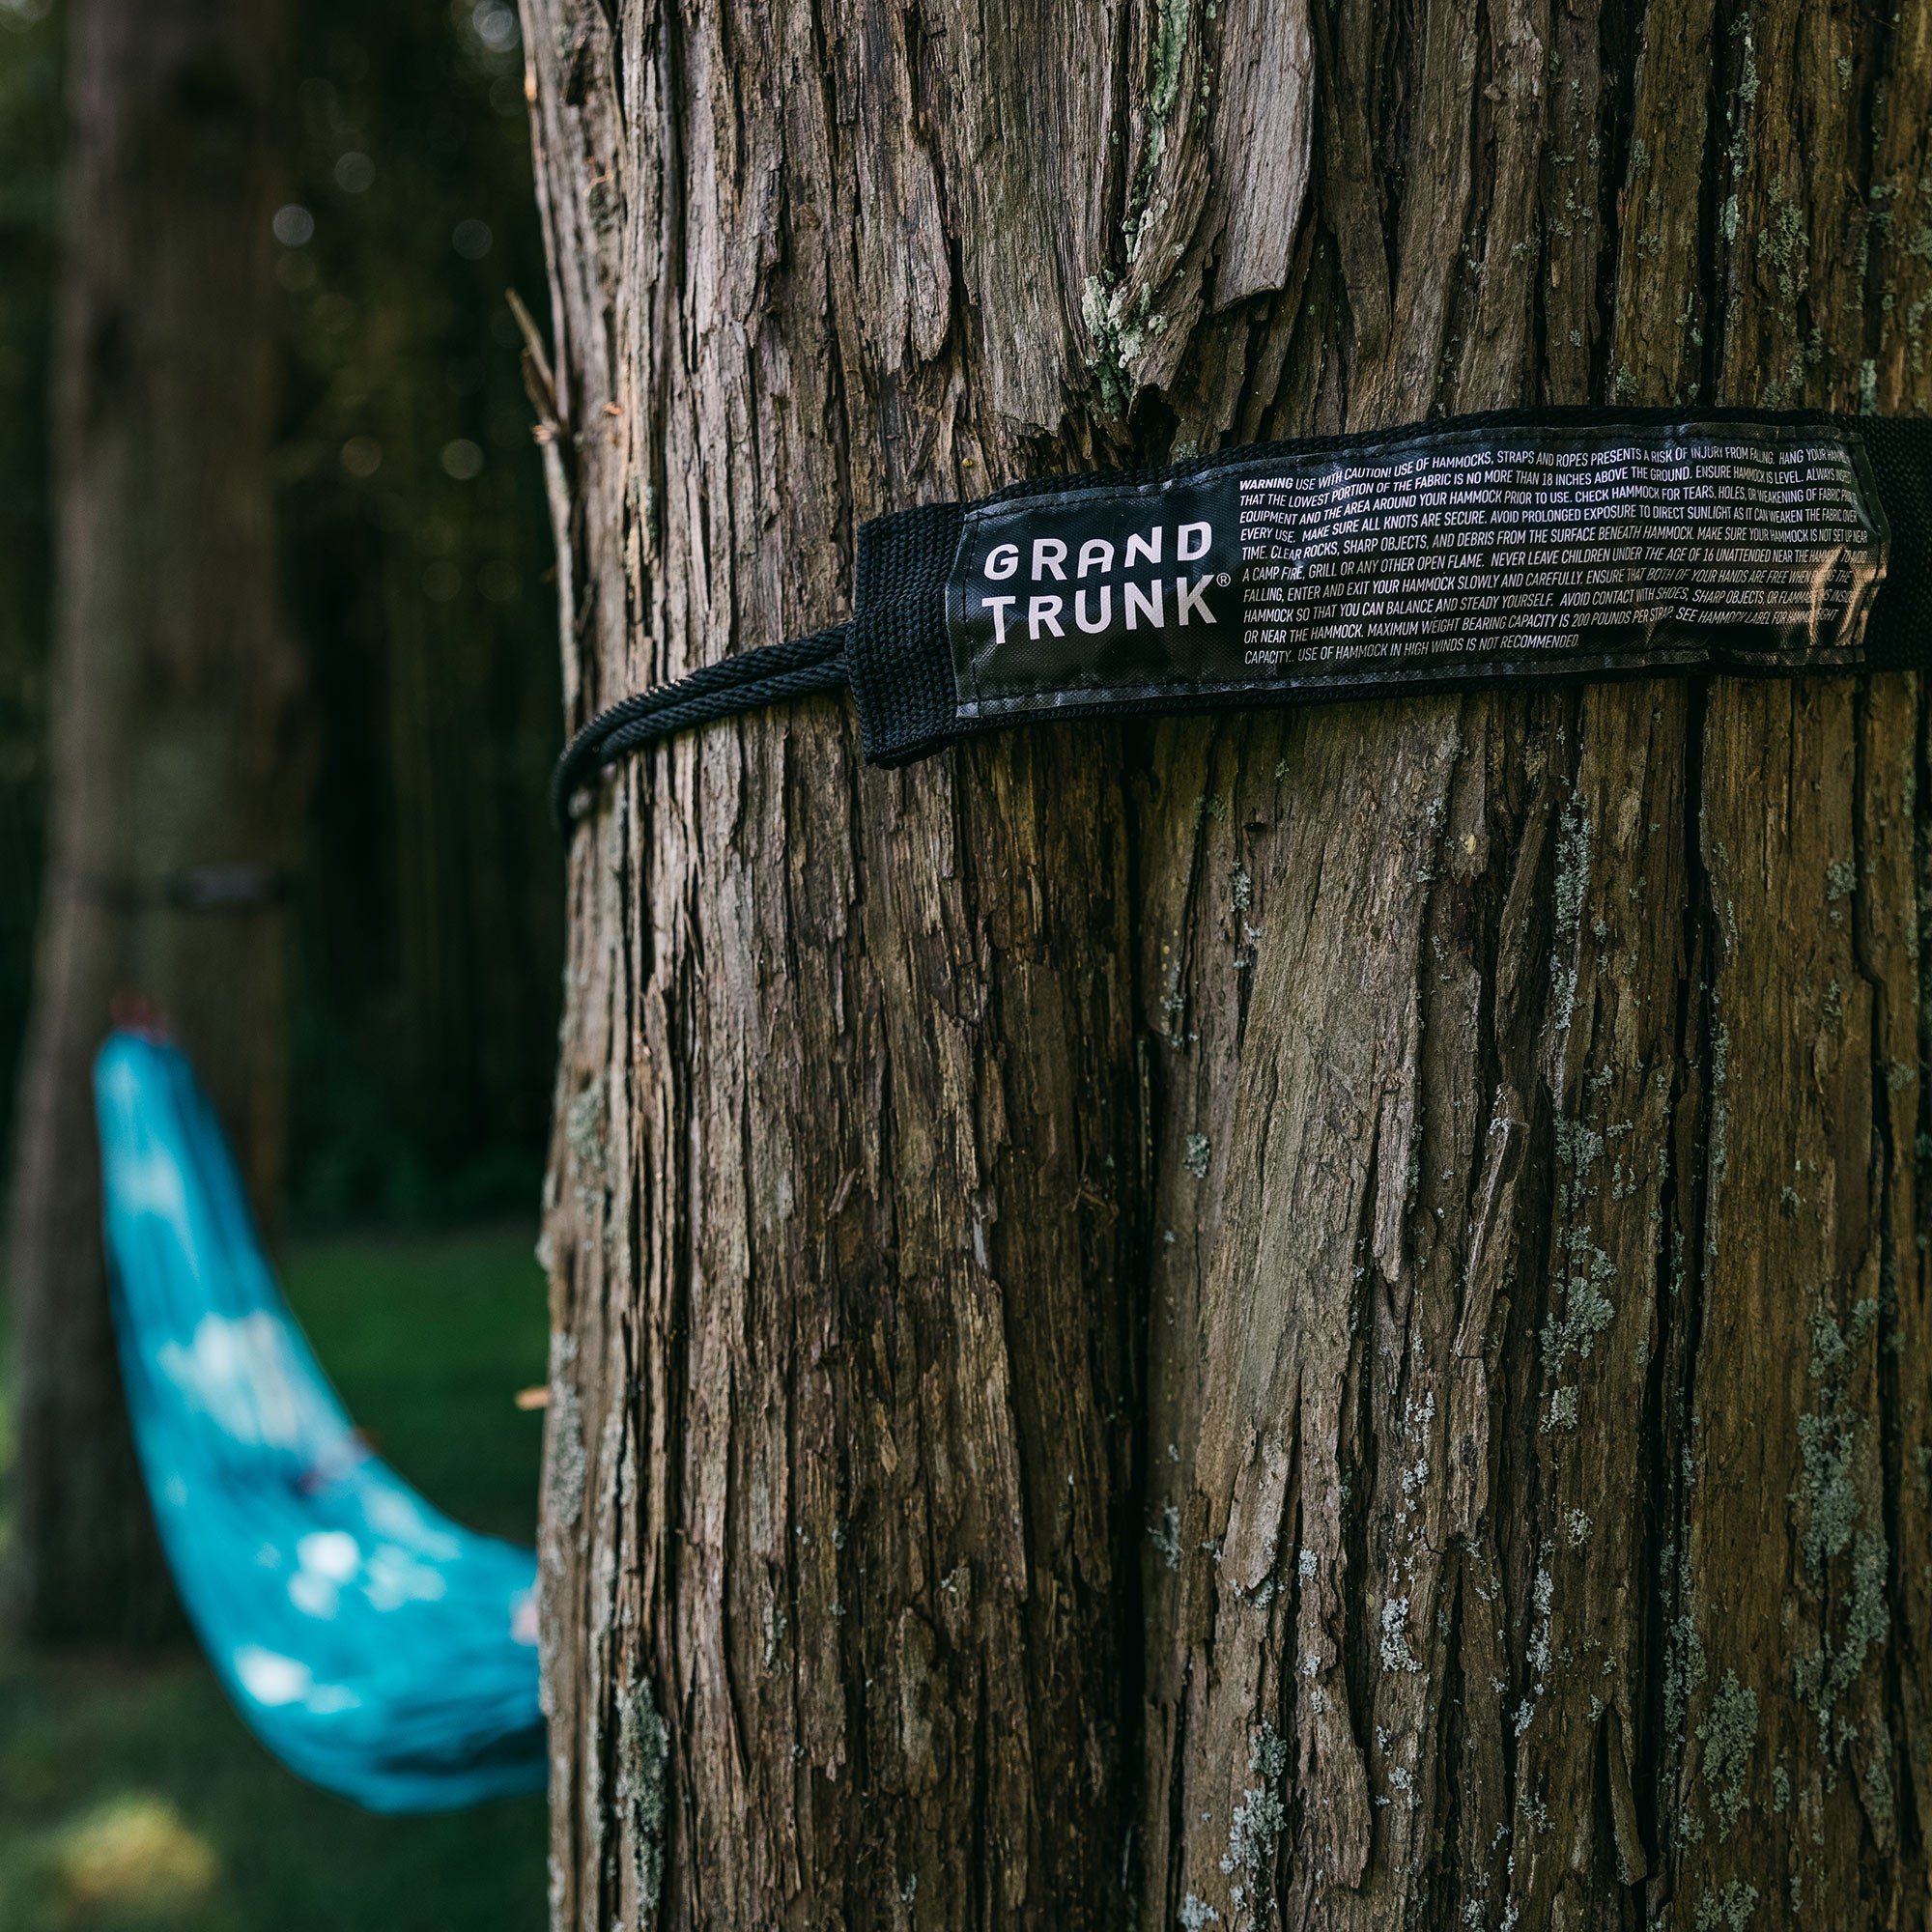 Grand Trunk® tree slings trunk protector hammock hanging in trees